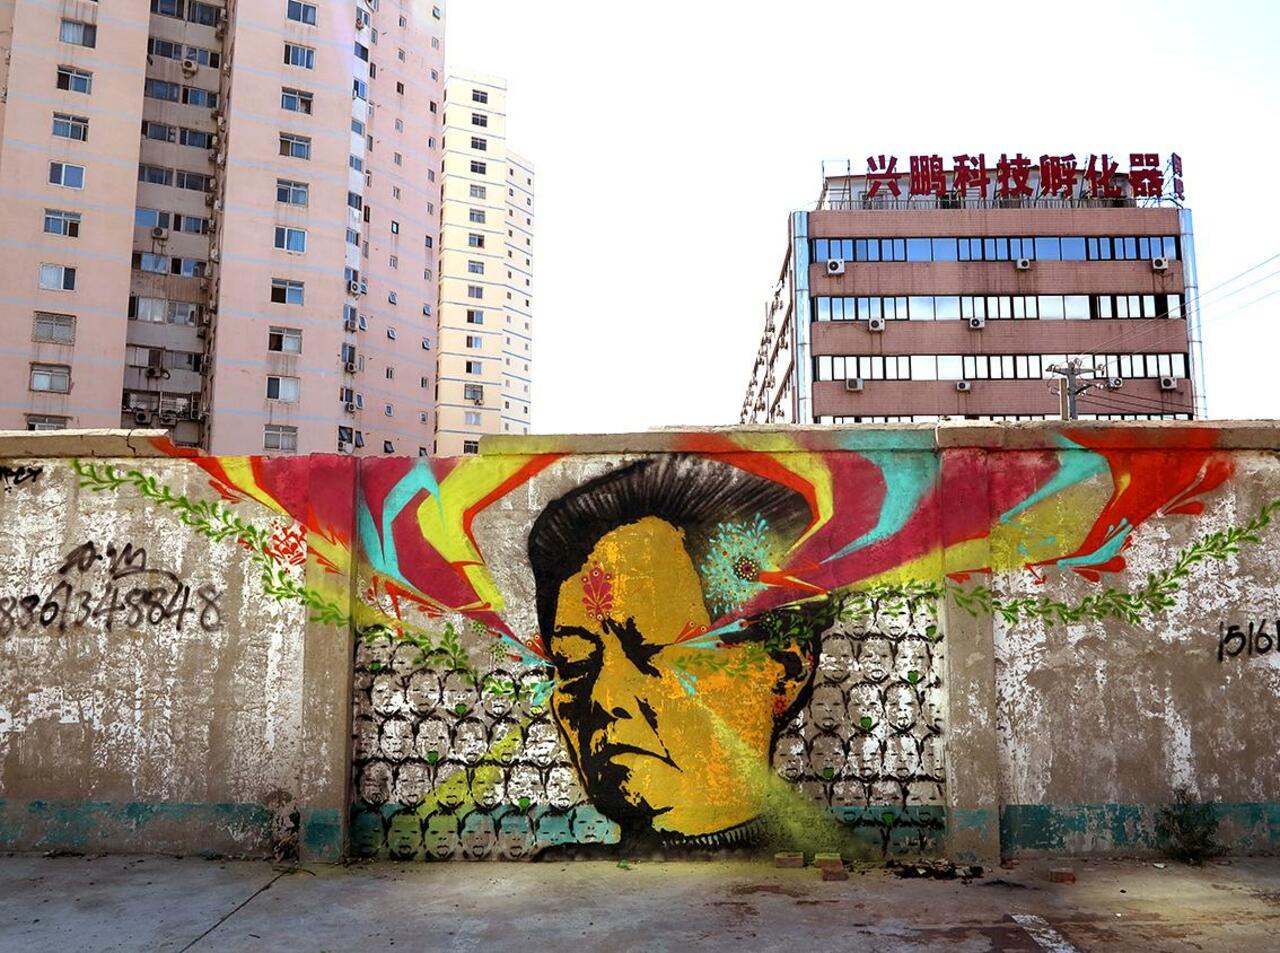 RT @thx2111: Stinkfish unveiled two new pieces in Beijing, China. #StreetArt #Graffiti #Mural http://t.co/UFoI8T3jXf